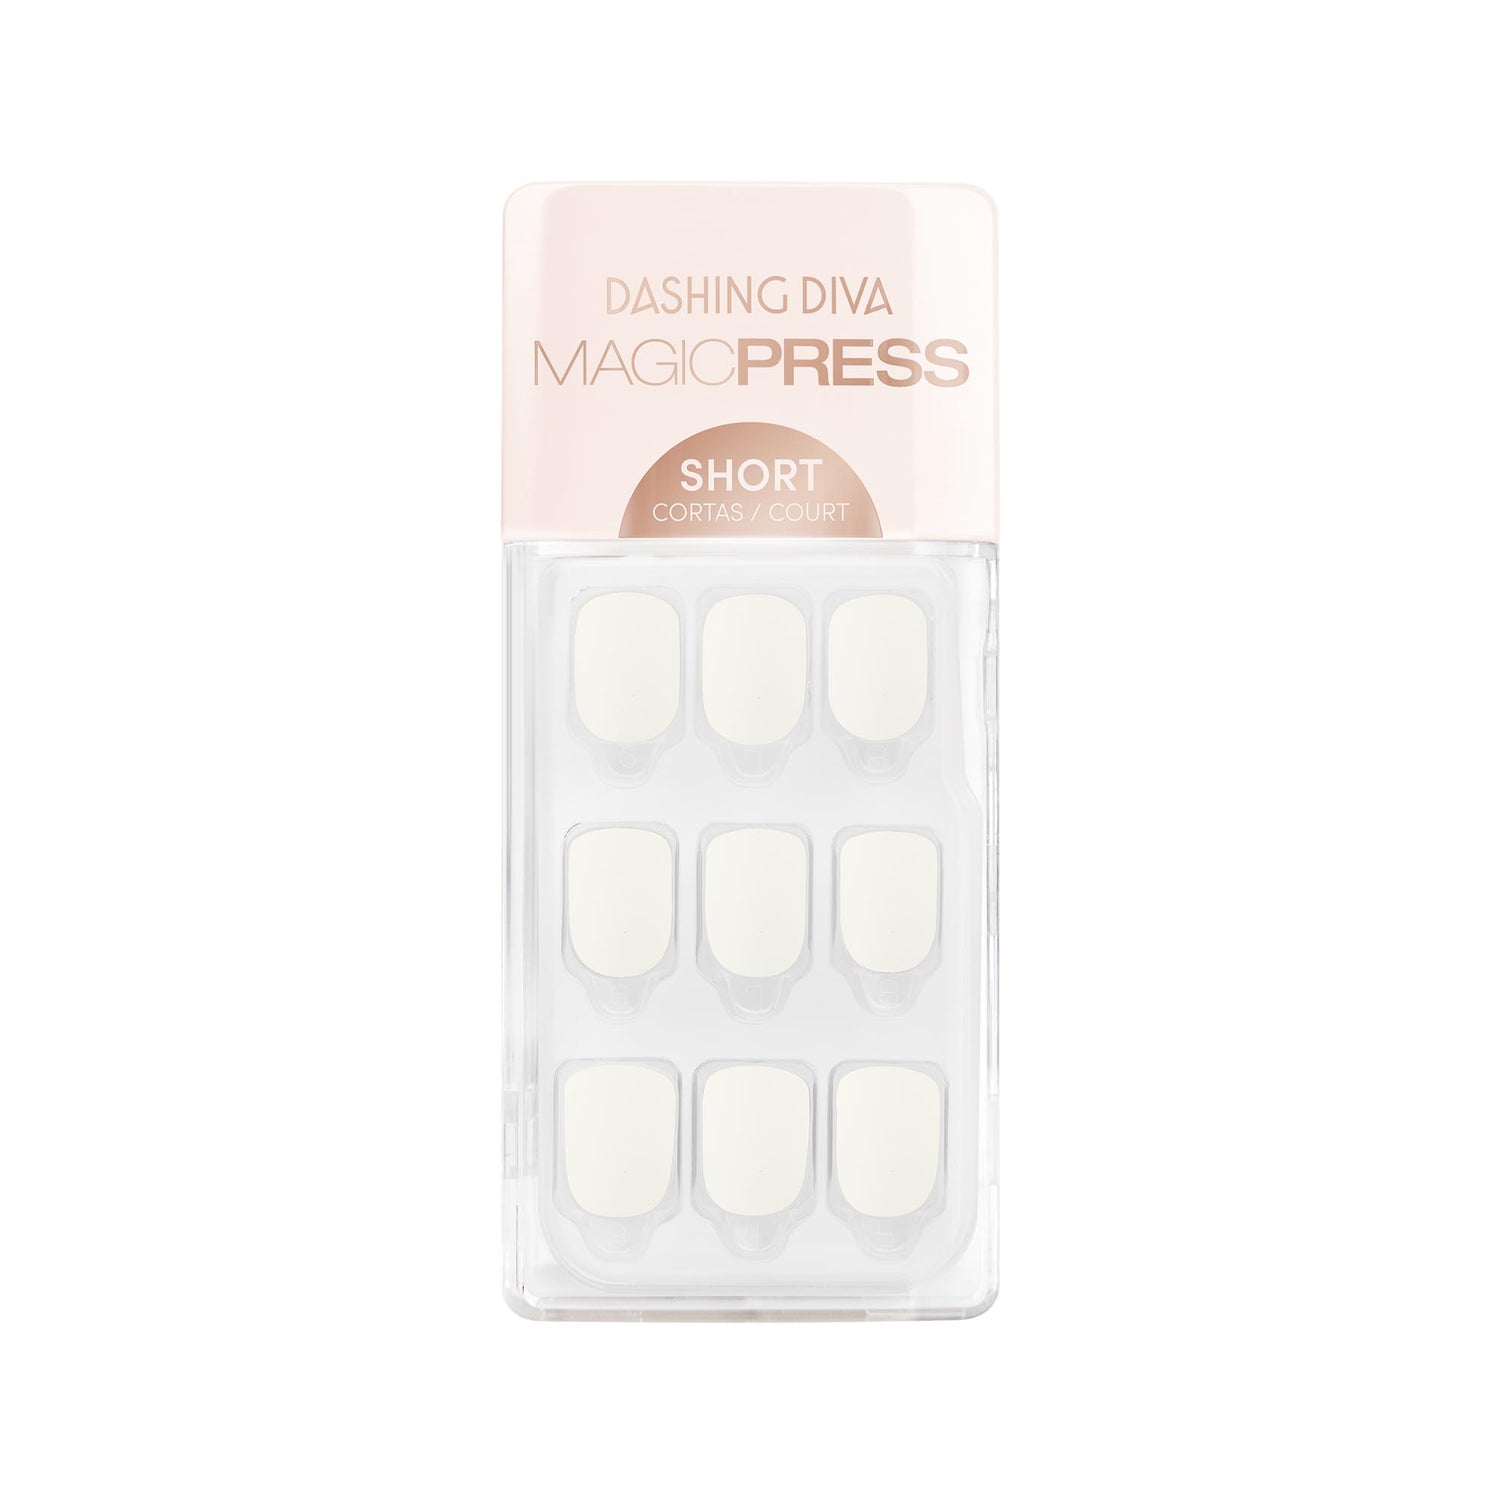 Dashing Diva MAGIC PRESS short, square white press on gel nails in matte finish.